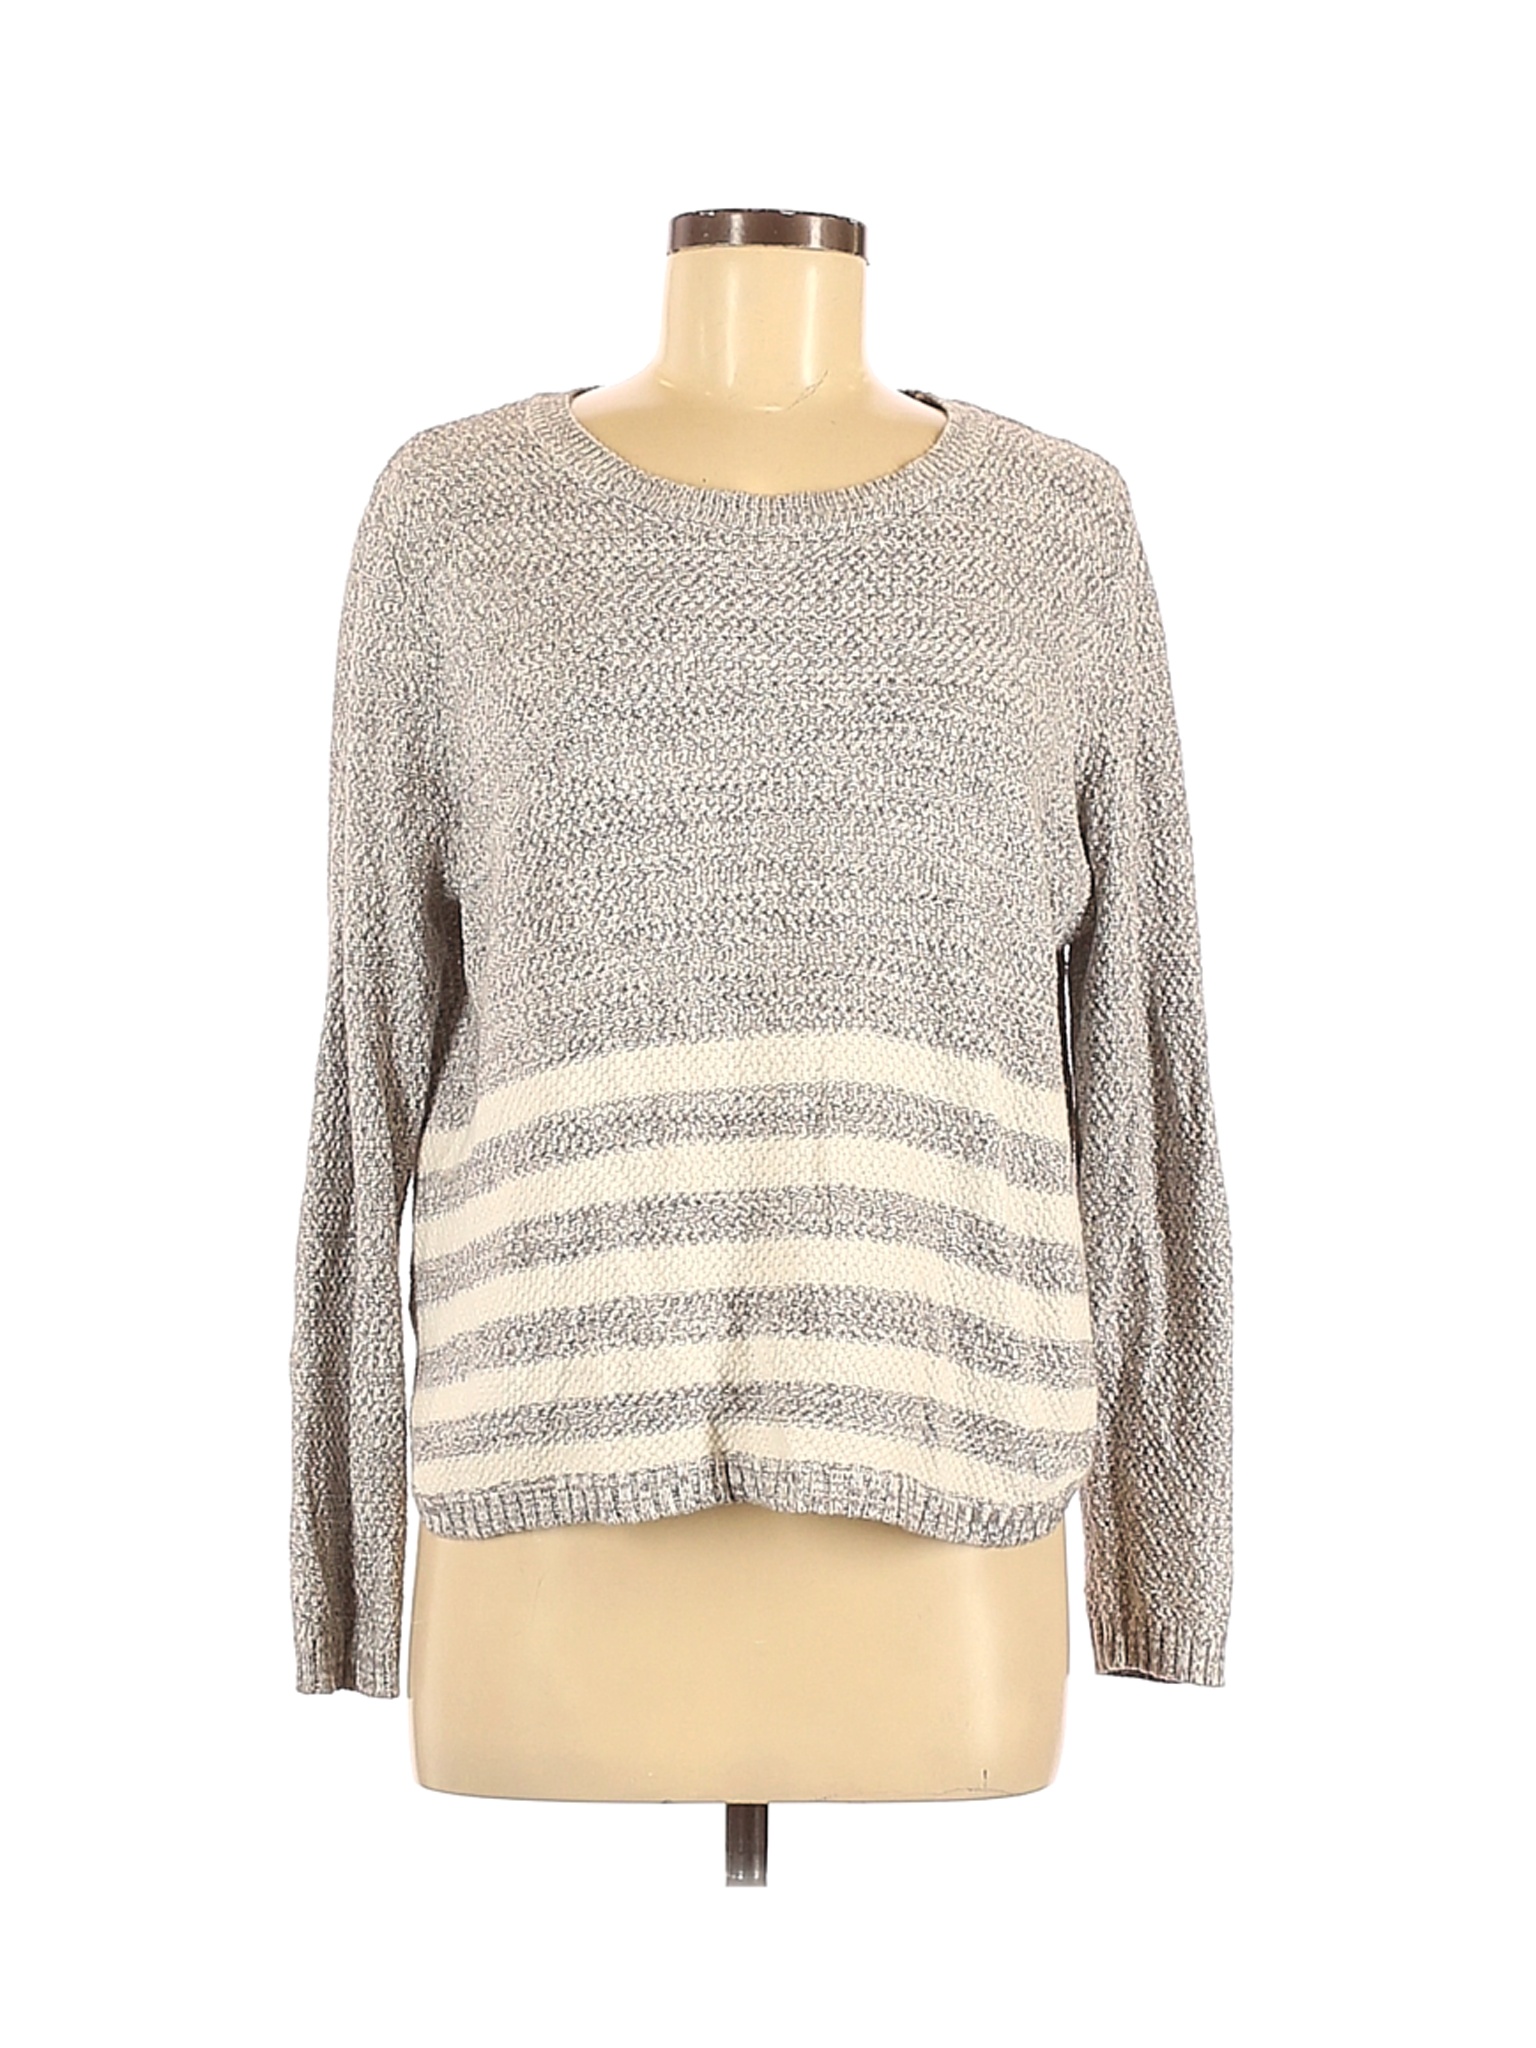 Cotton On Women Gray Pullover Sweater M | eBay